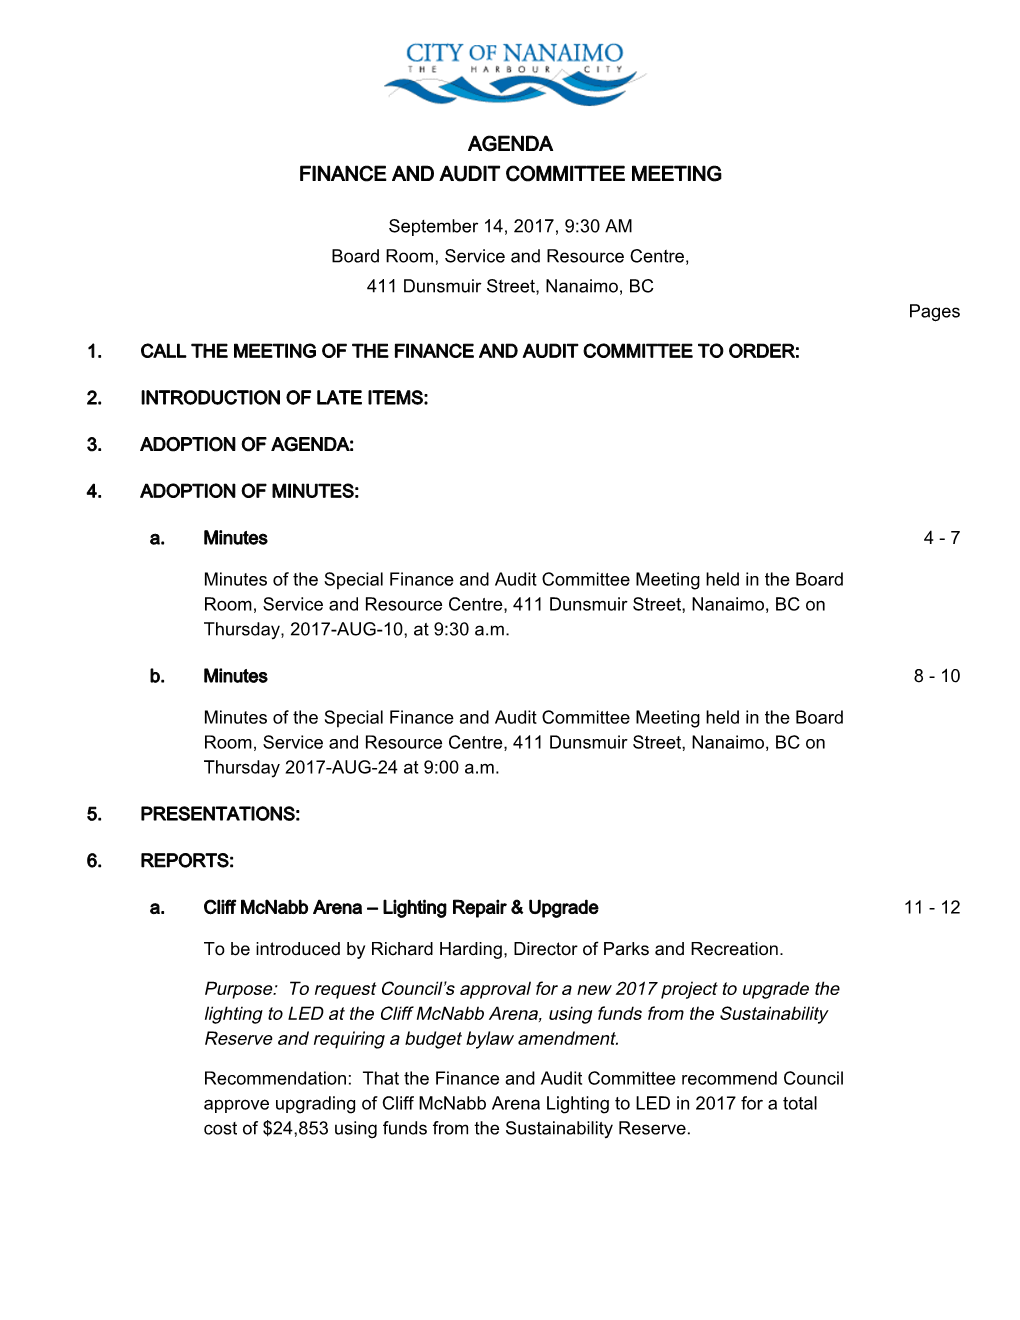 Finance and Audti Committee Agenda